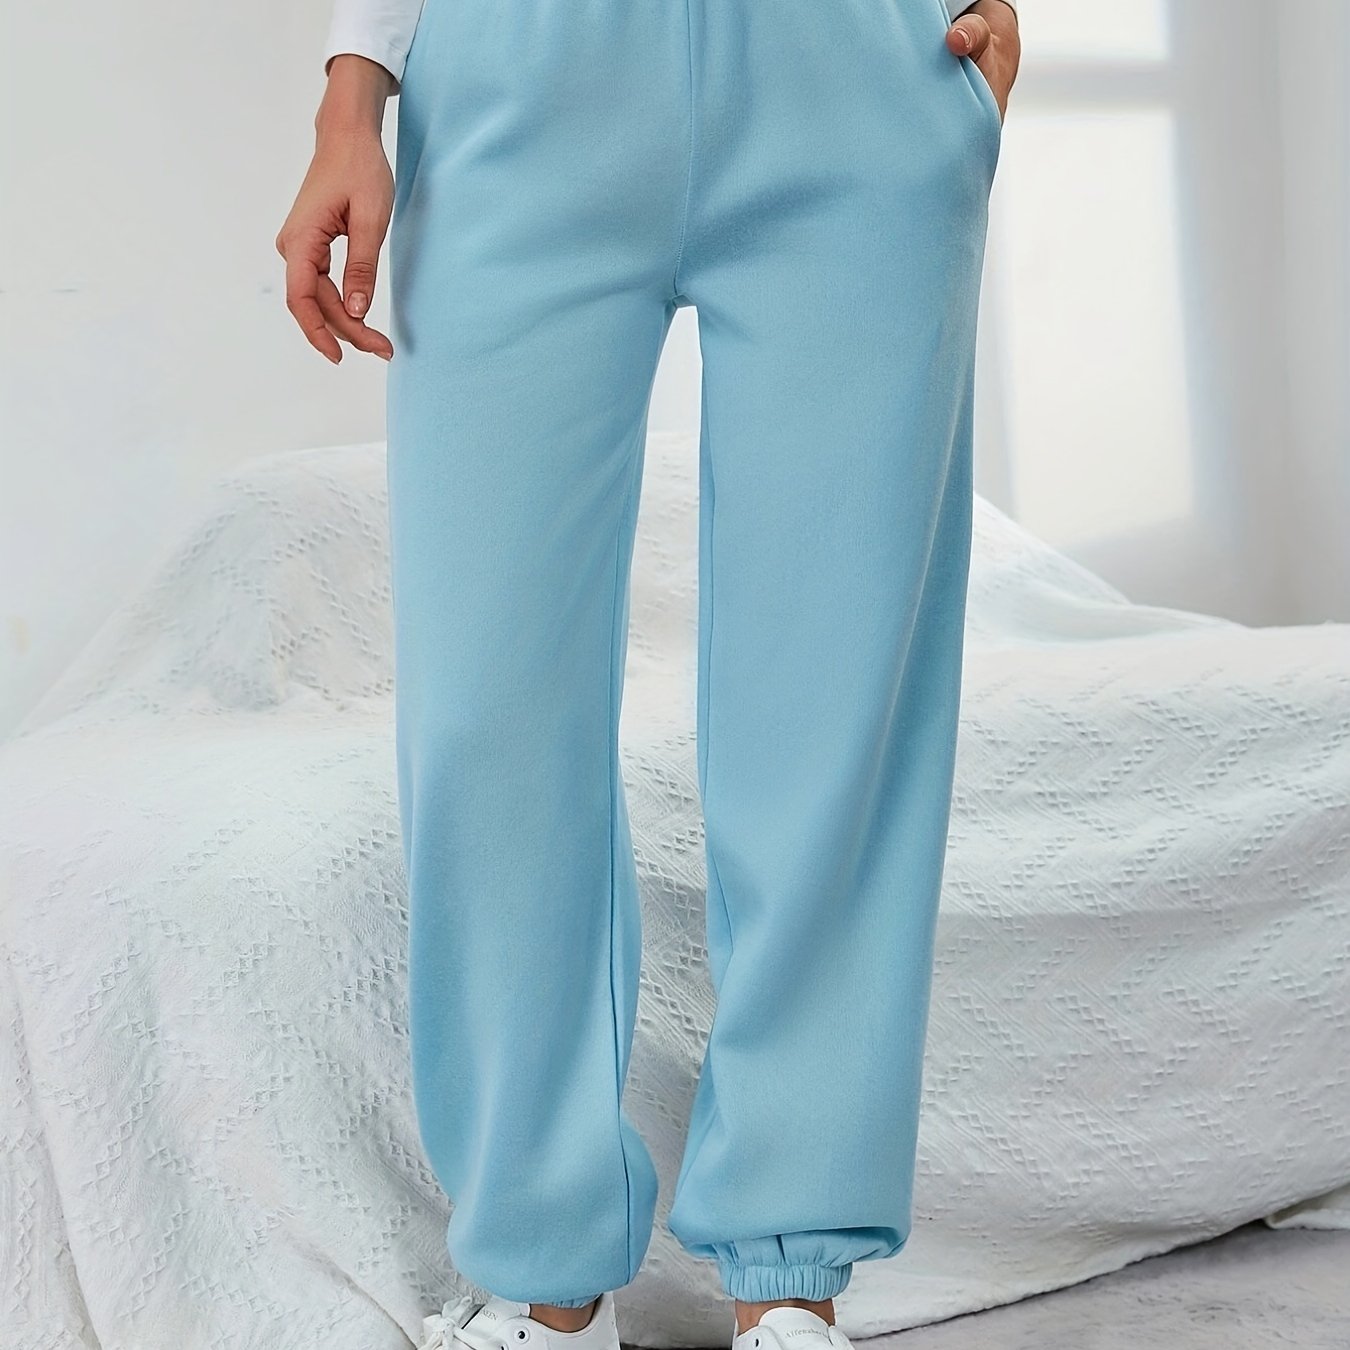 vlovelaw  Solid Versatile Pants, Casual Elastic Waist Jogger Pants, Women's Clothing